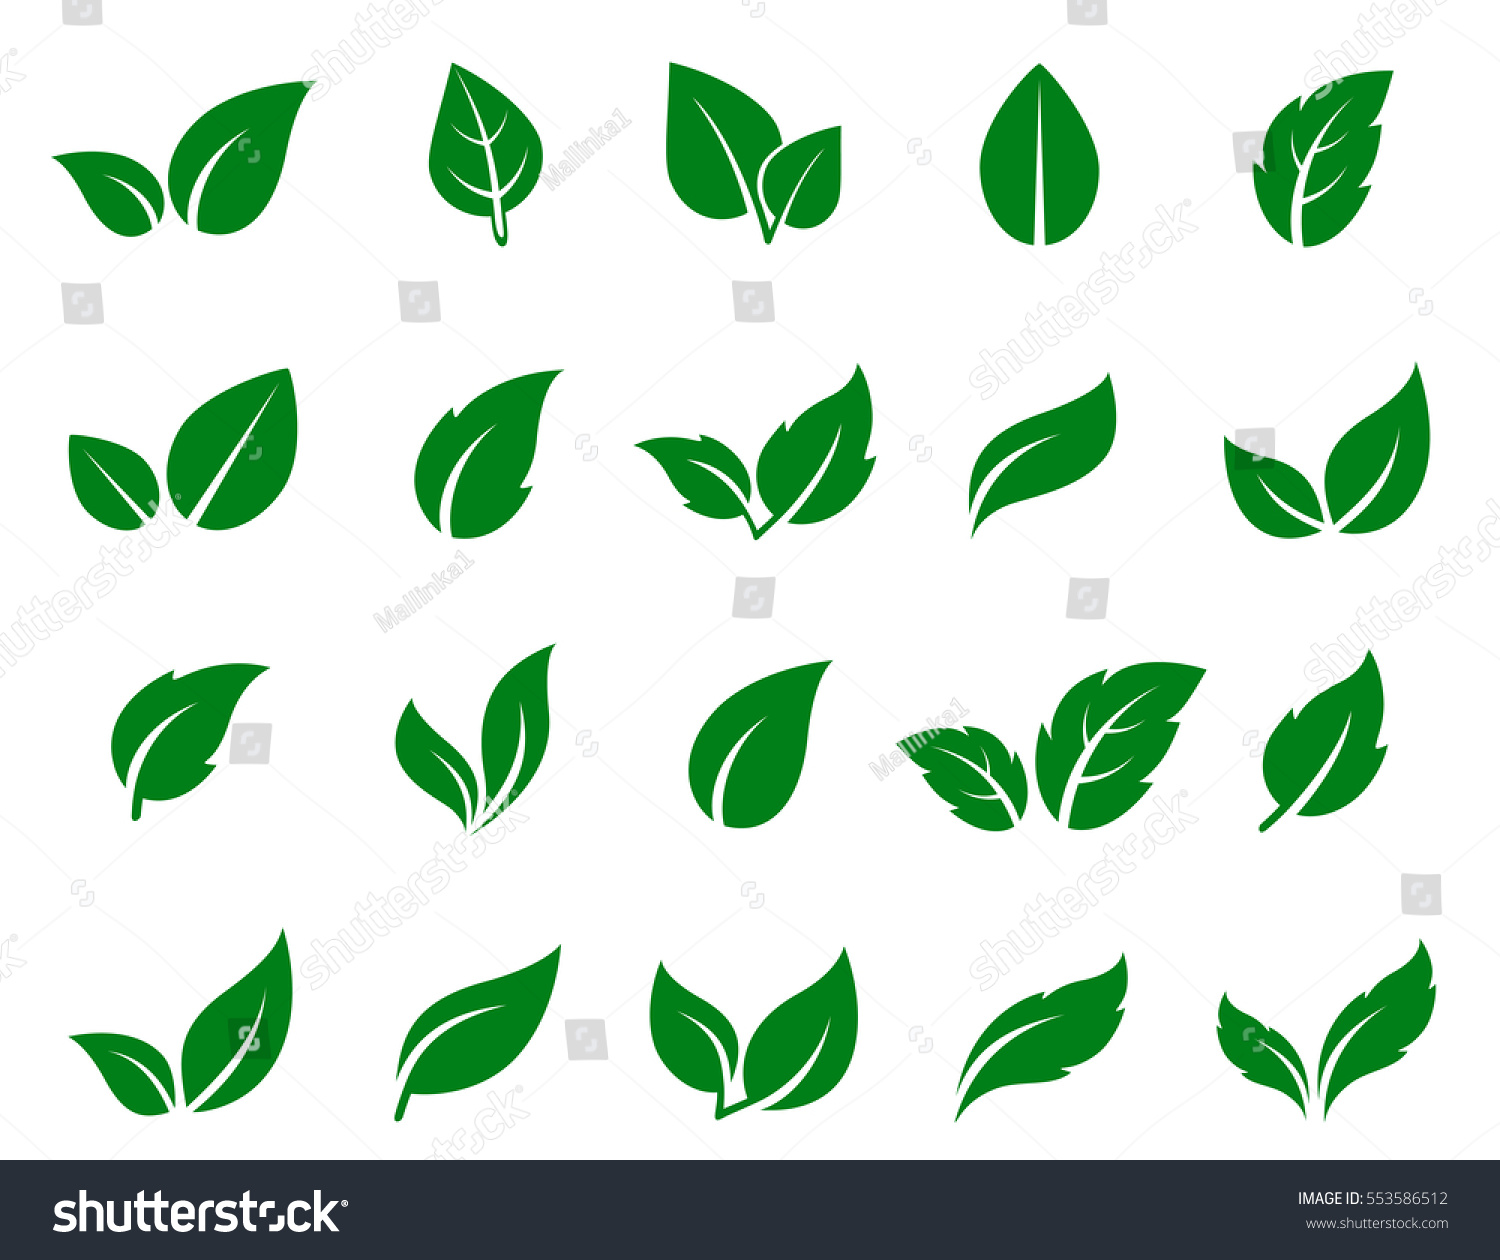 SVG of green leaf icons set on white background svg